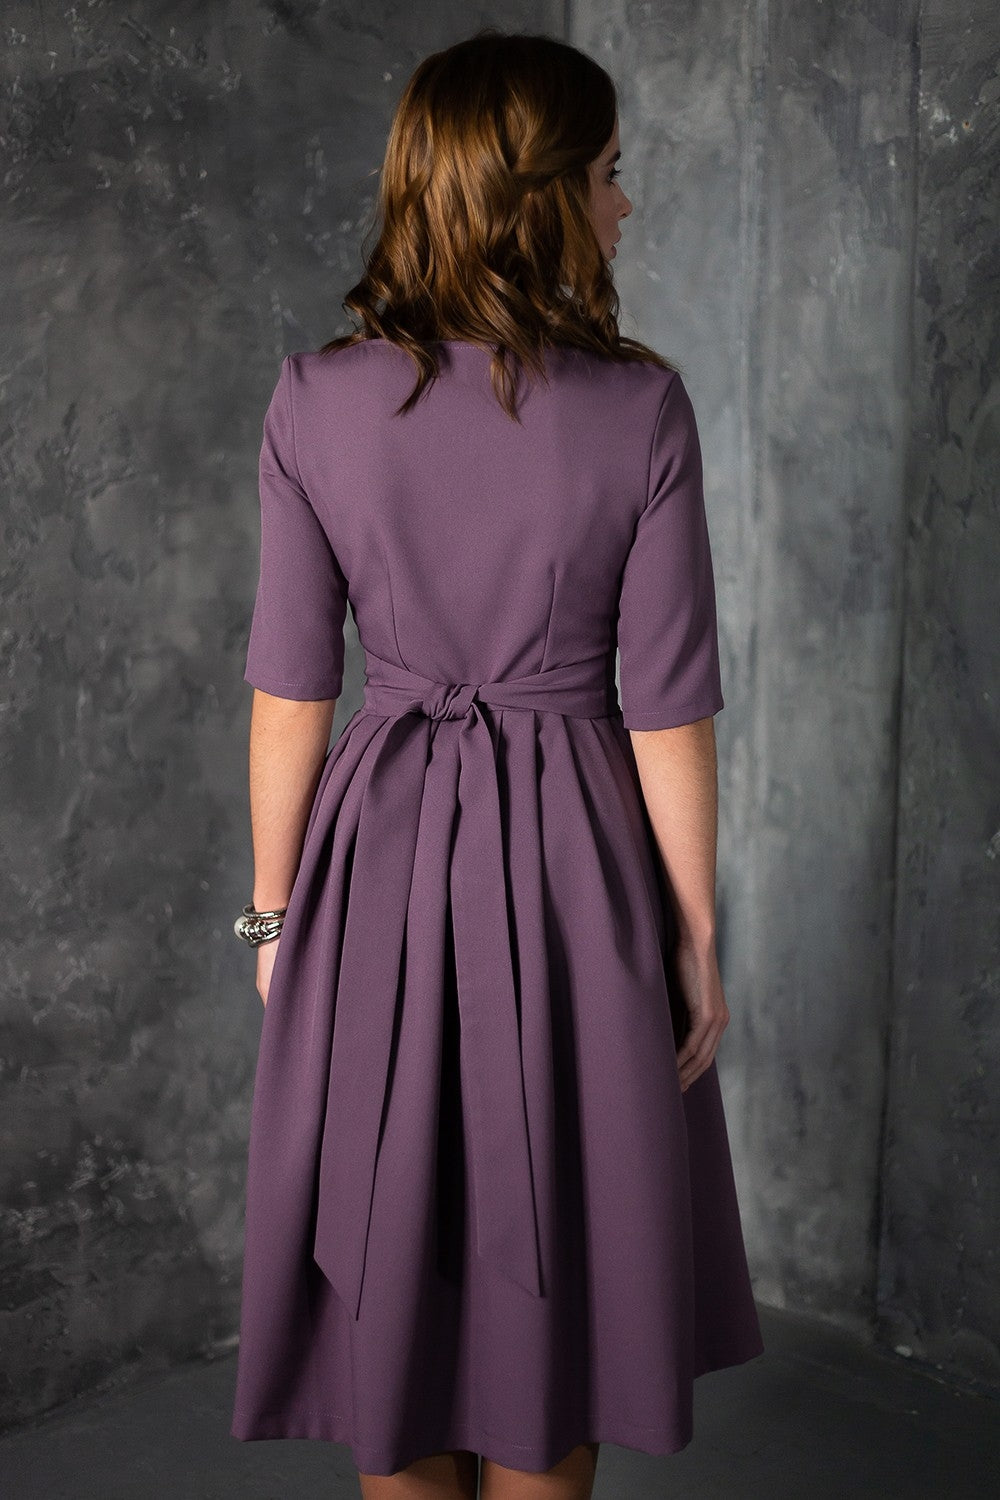 Pelēka violeta kleita ar ielocēm